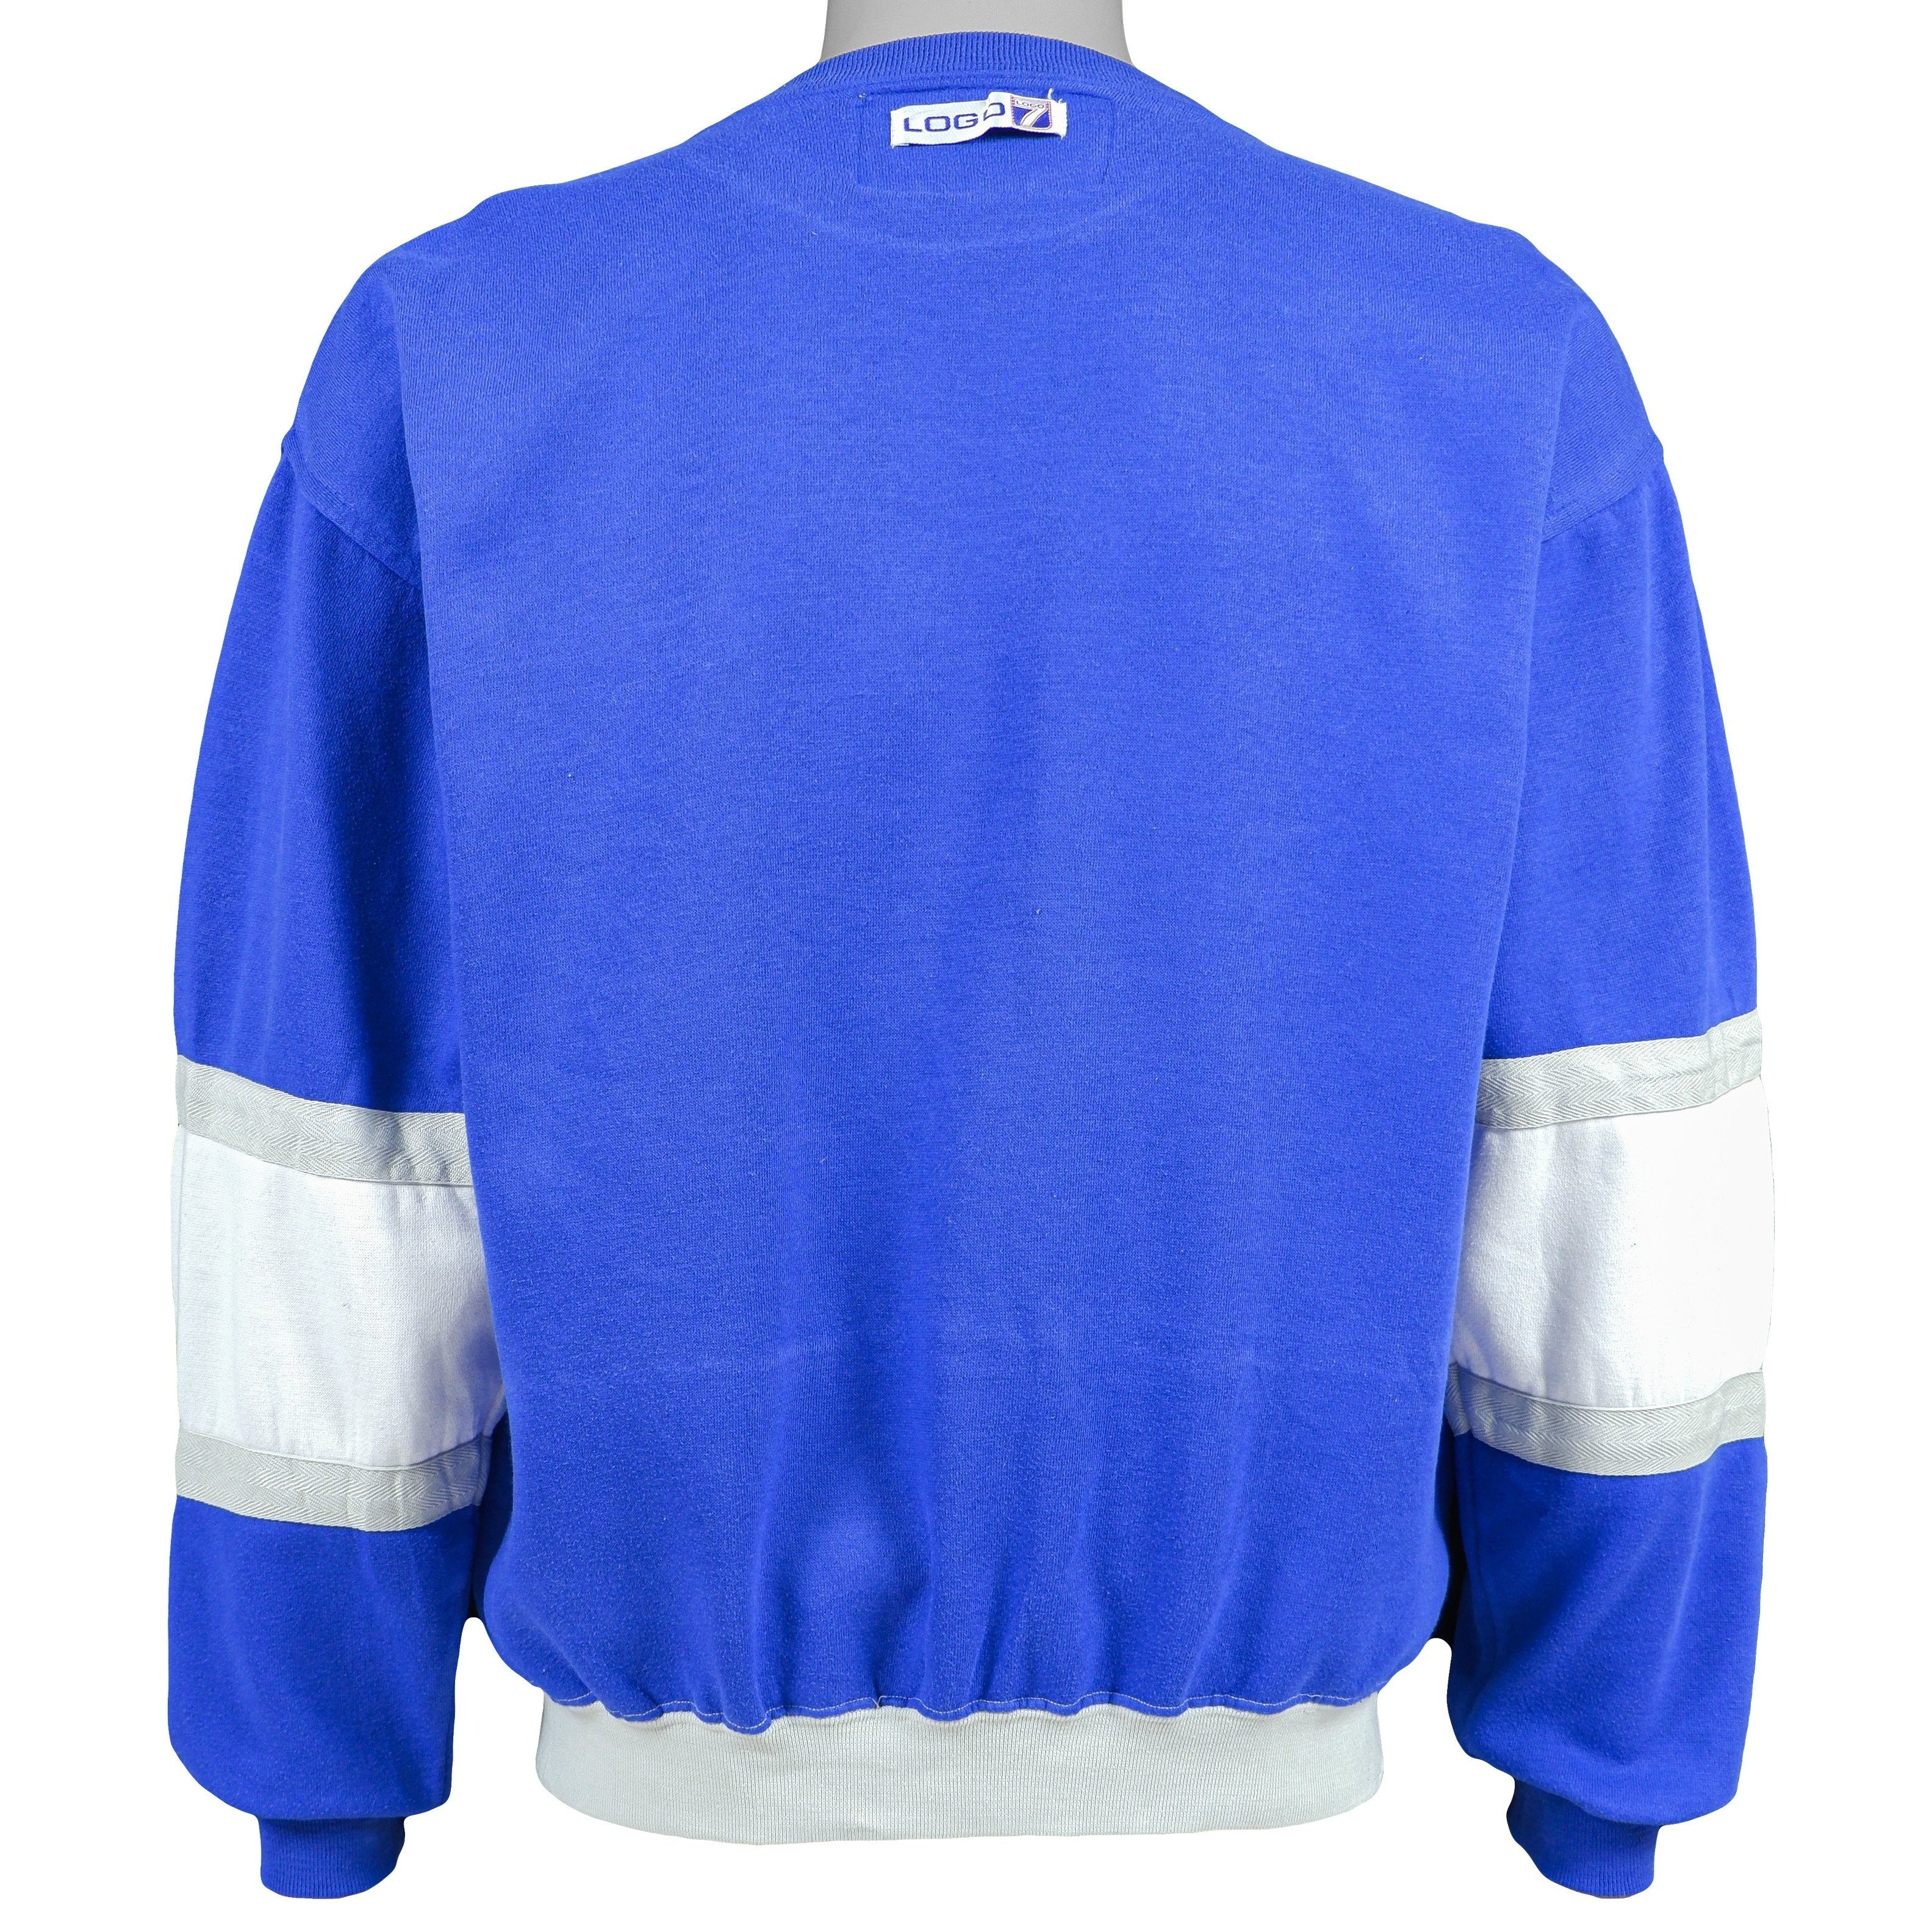 Vintage 90s ST.LOUIS BLUES Nhl Hockey Logo 7 Blue Sweatshirt 